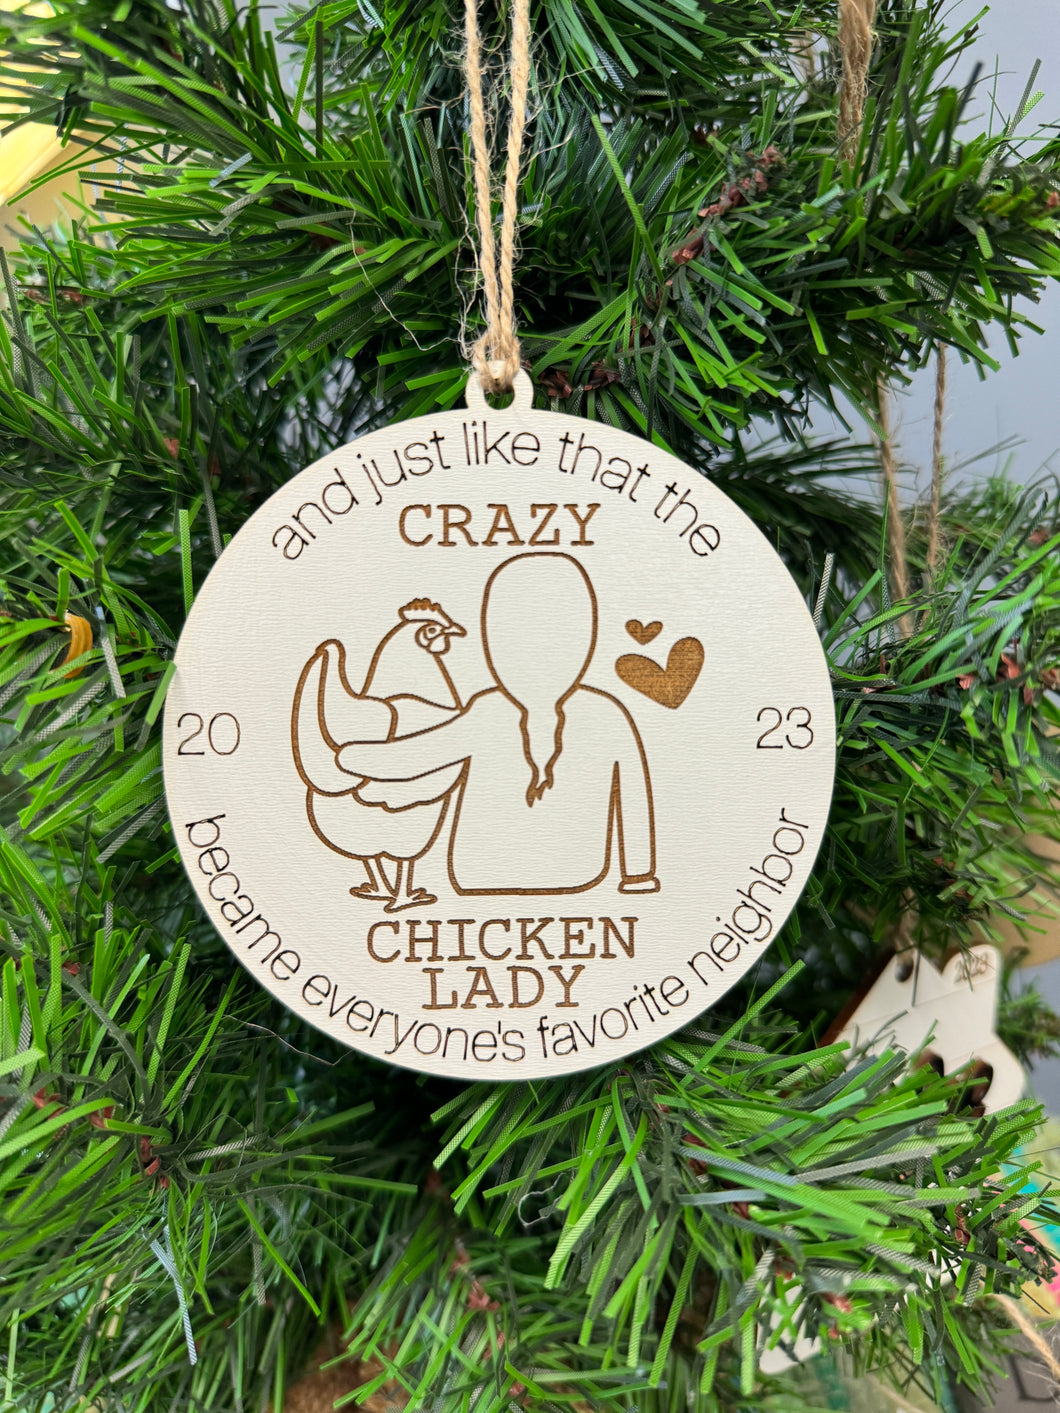 Crazy chicken lady ornament